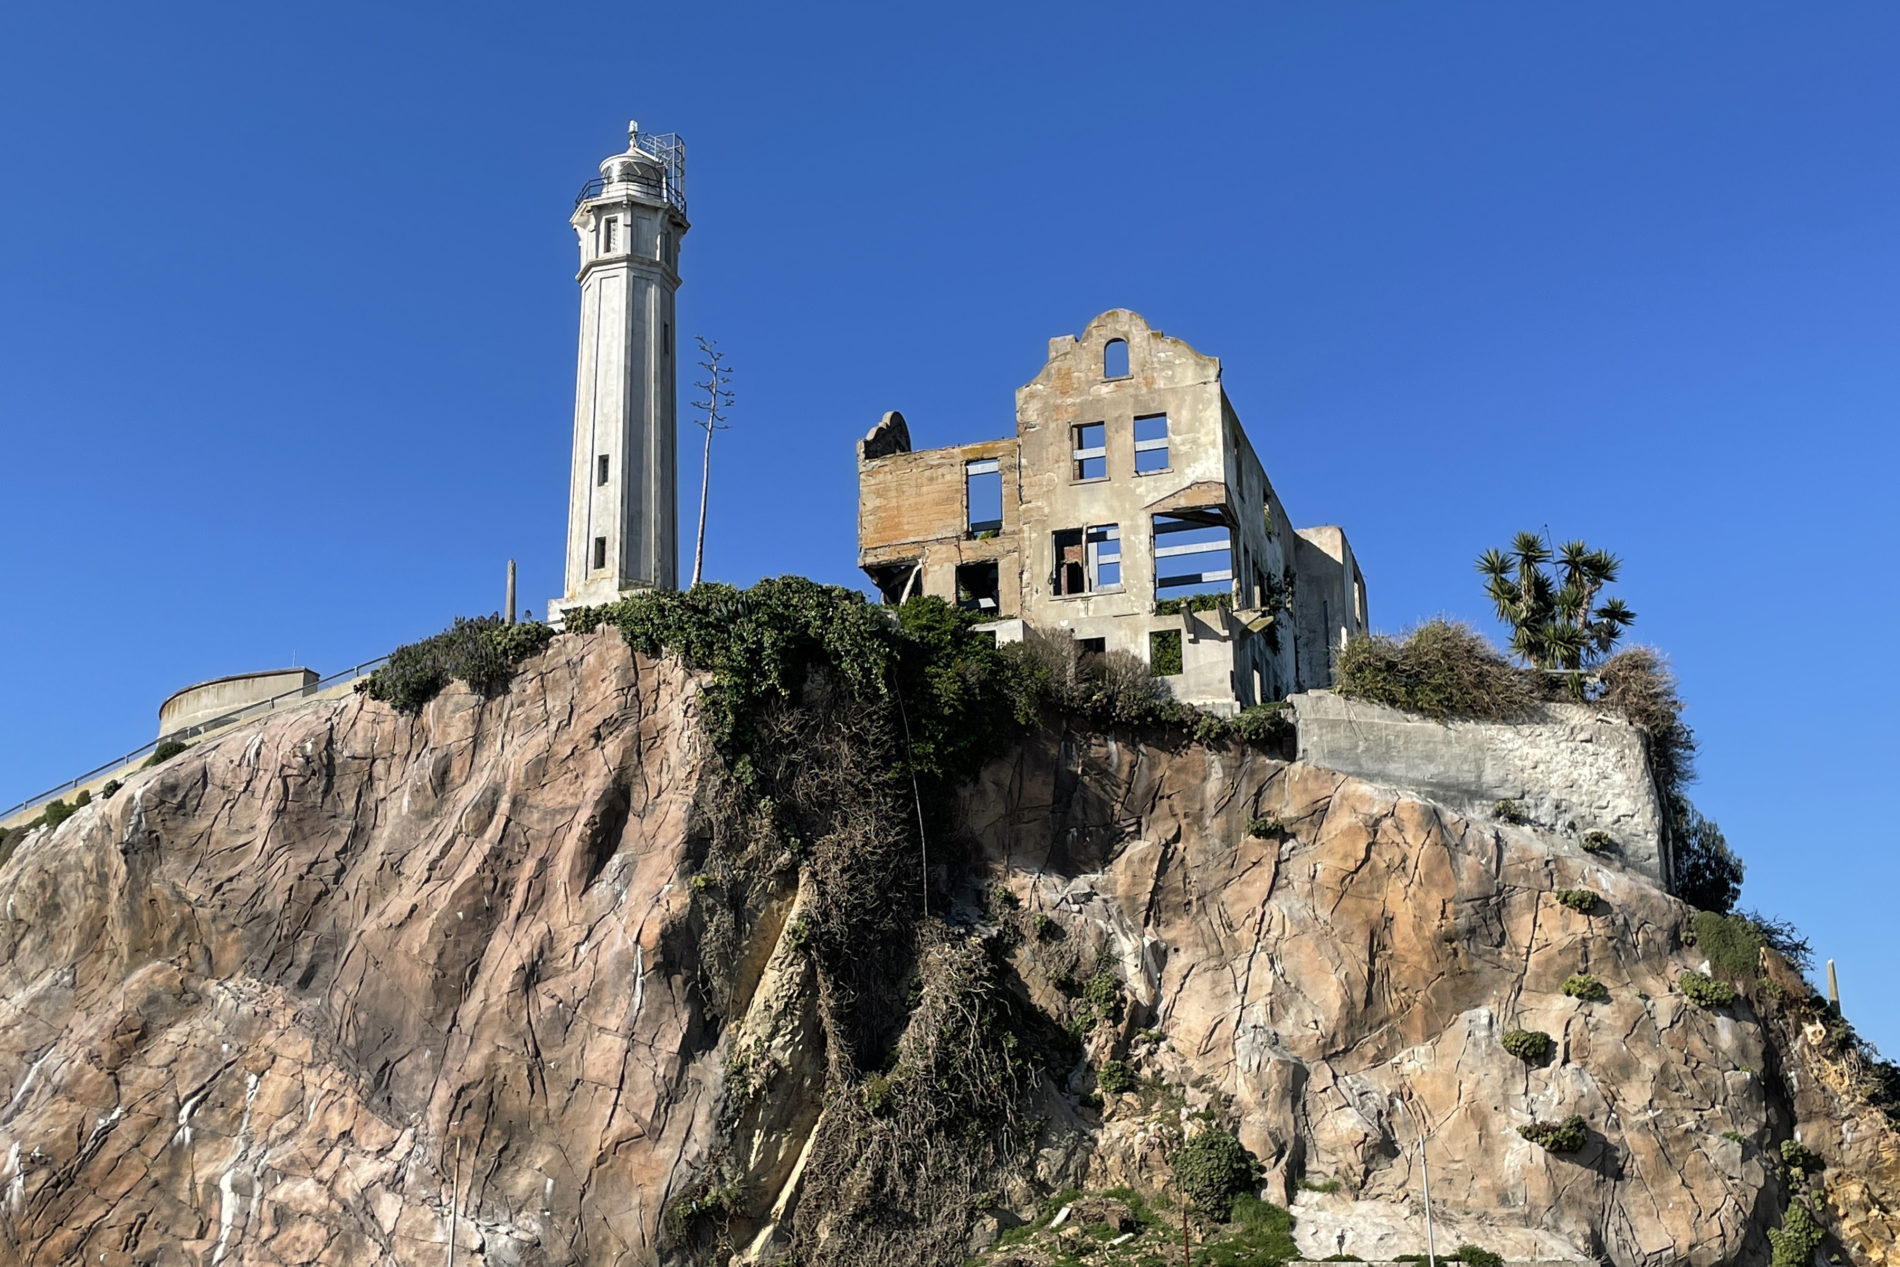 Alcatraz Lighthouse and the ruins of the Warden’s house on Alcatraz.